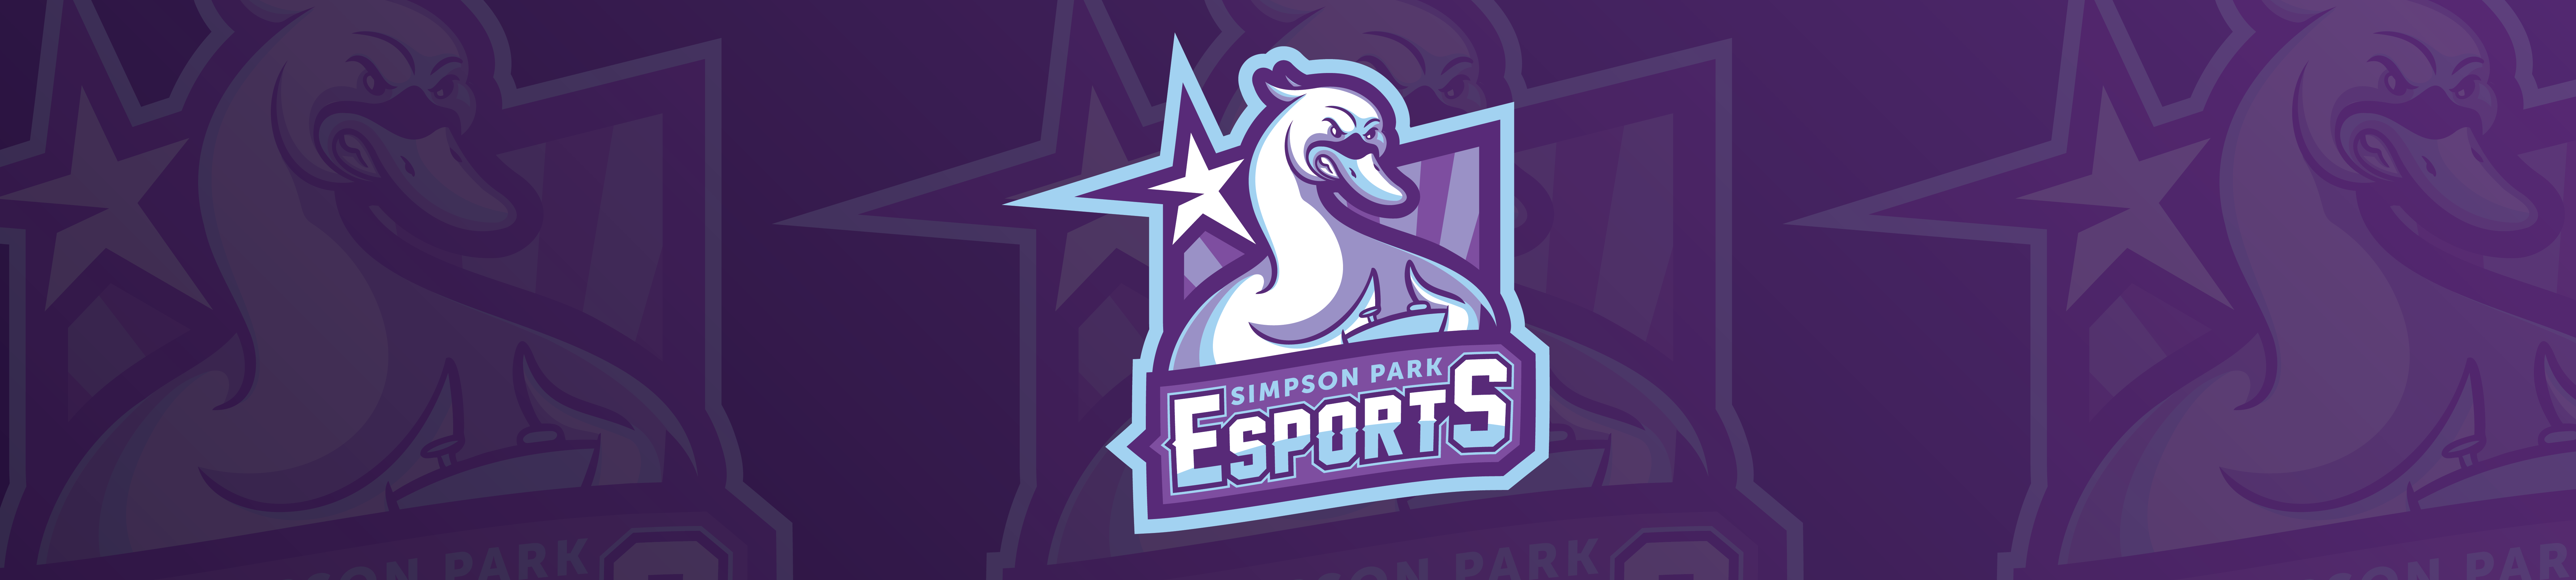 City of Lakeland eSports logo for Simpson Park Community Center